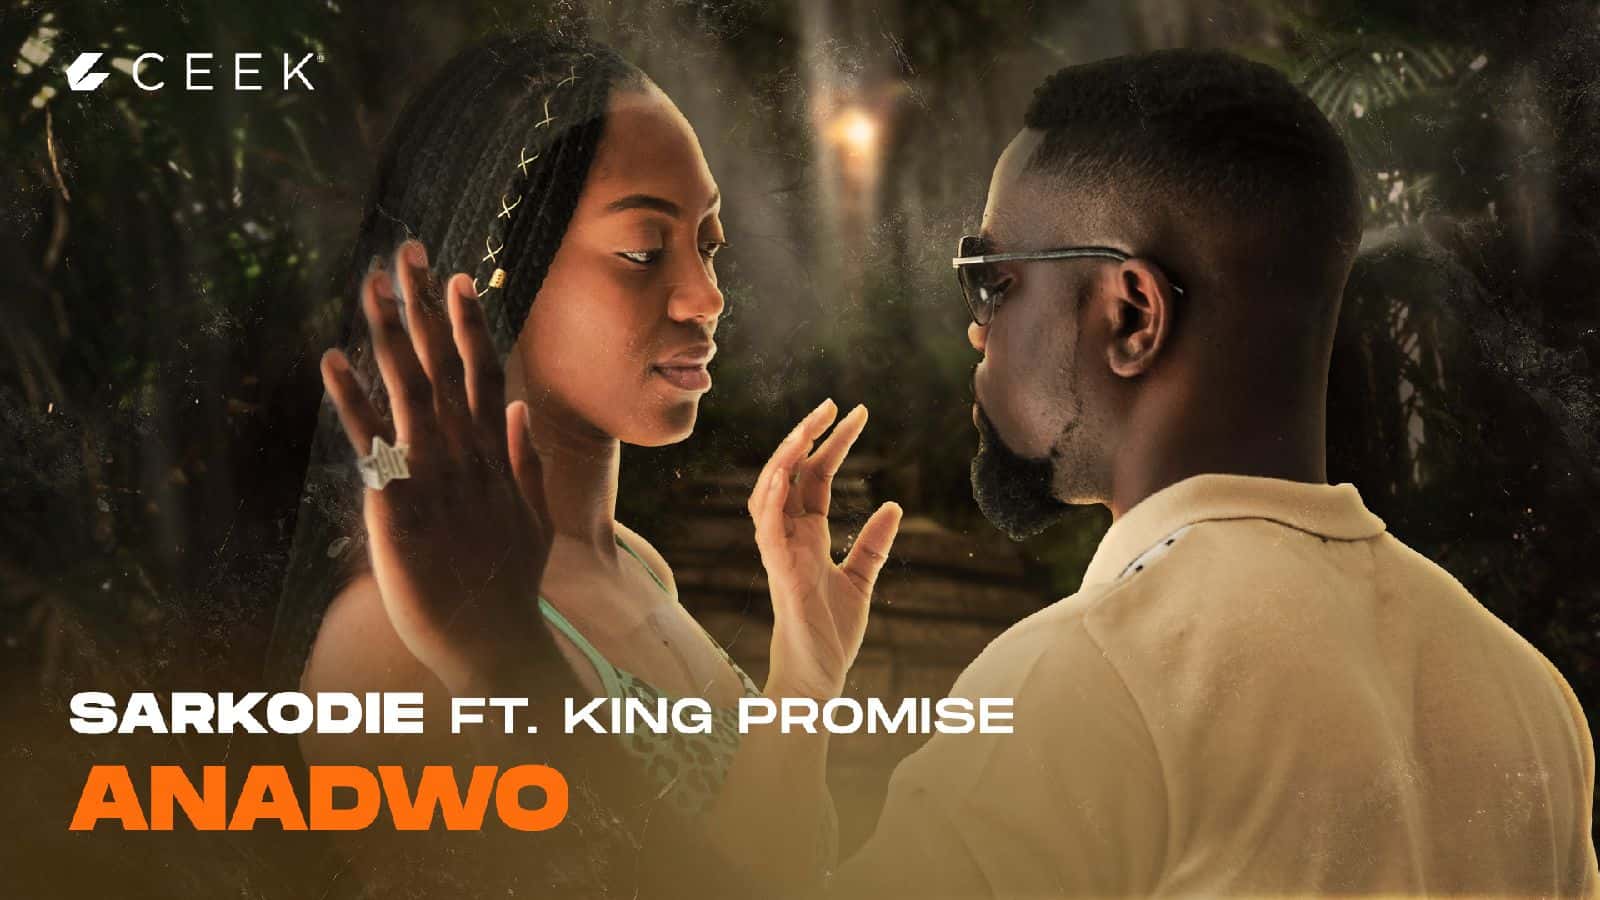 Sarkodie ft King Promise – Anadwo ceek.com